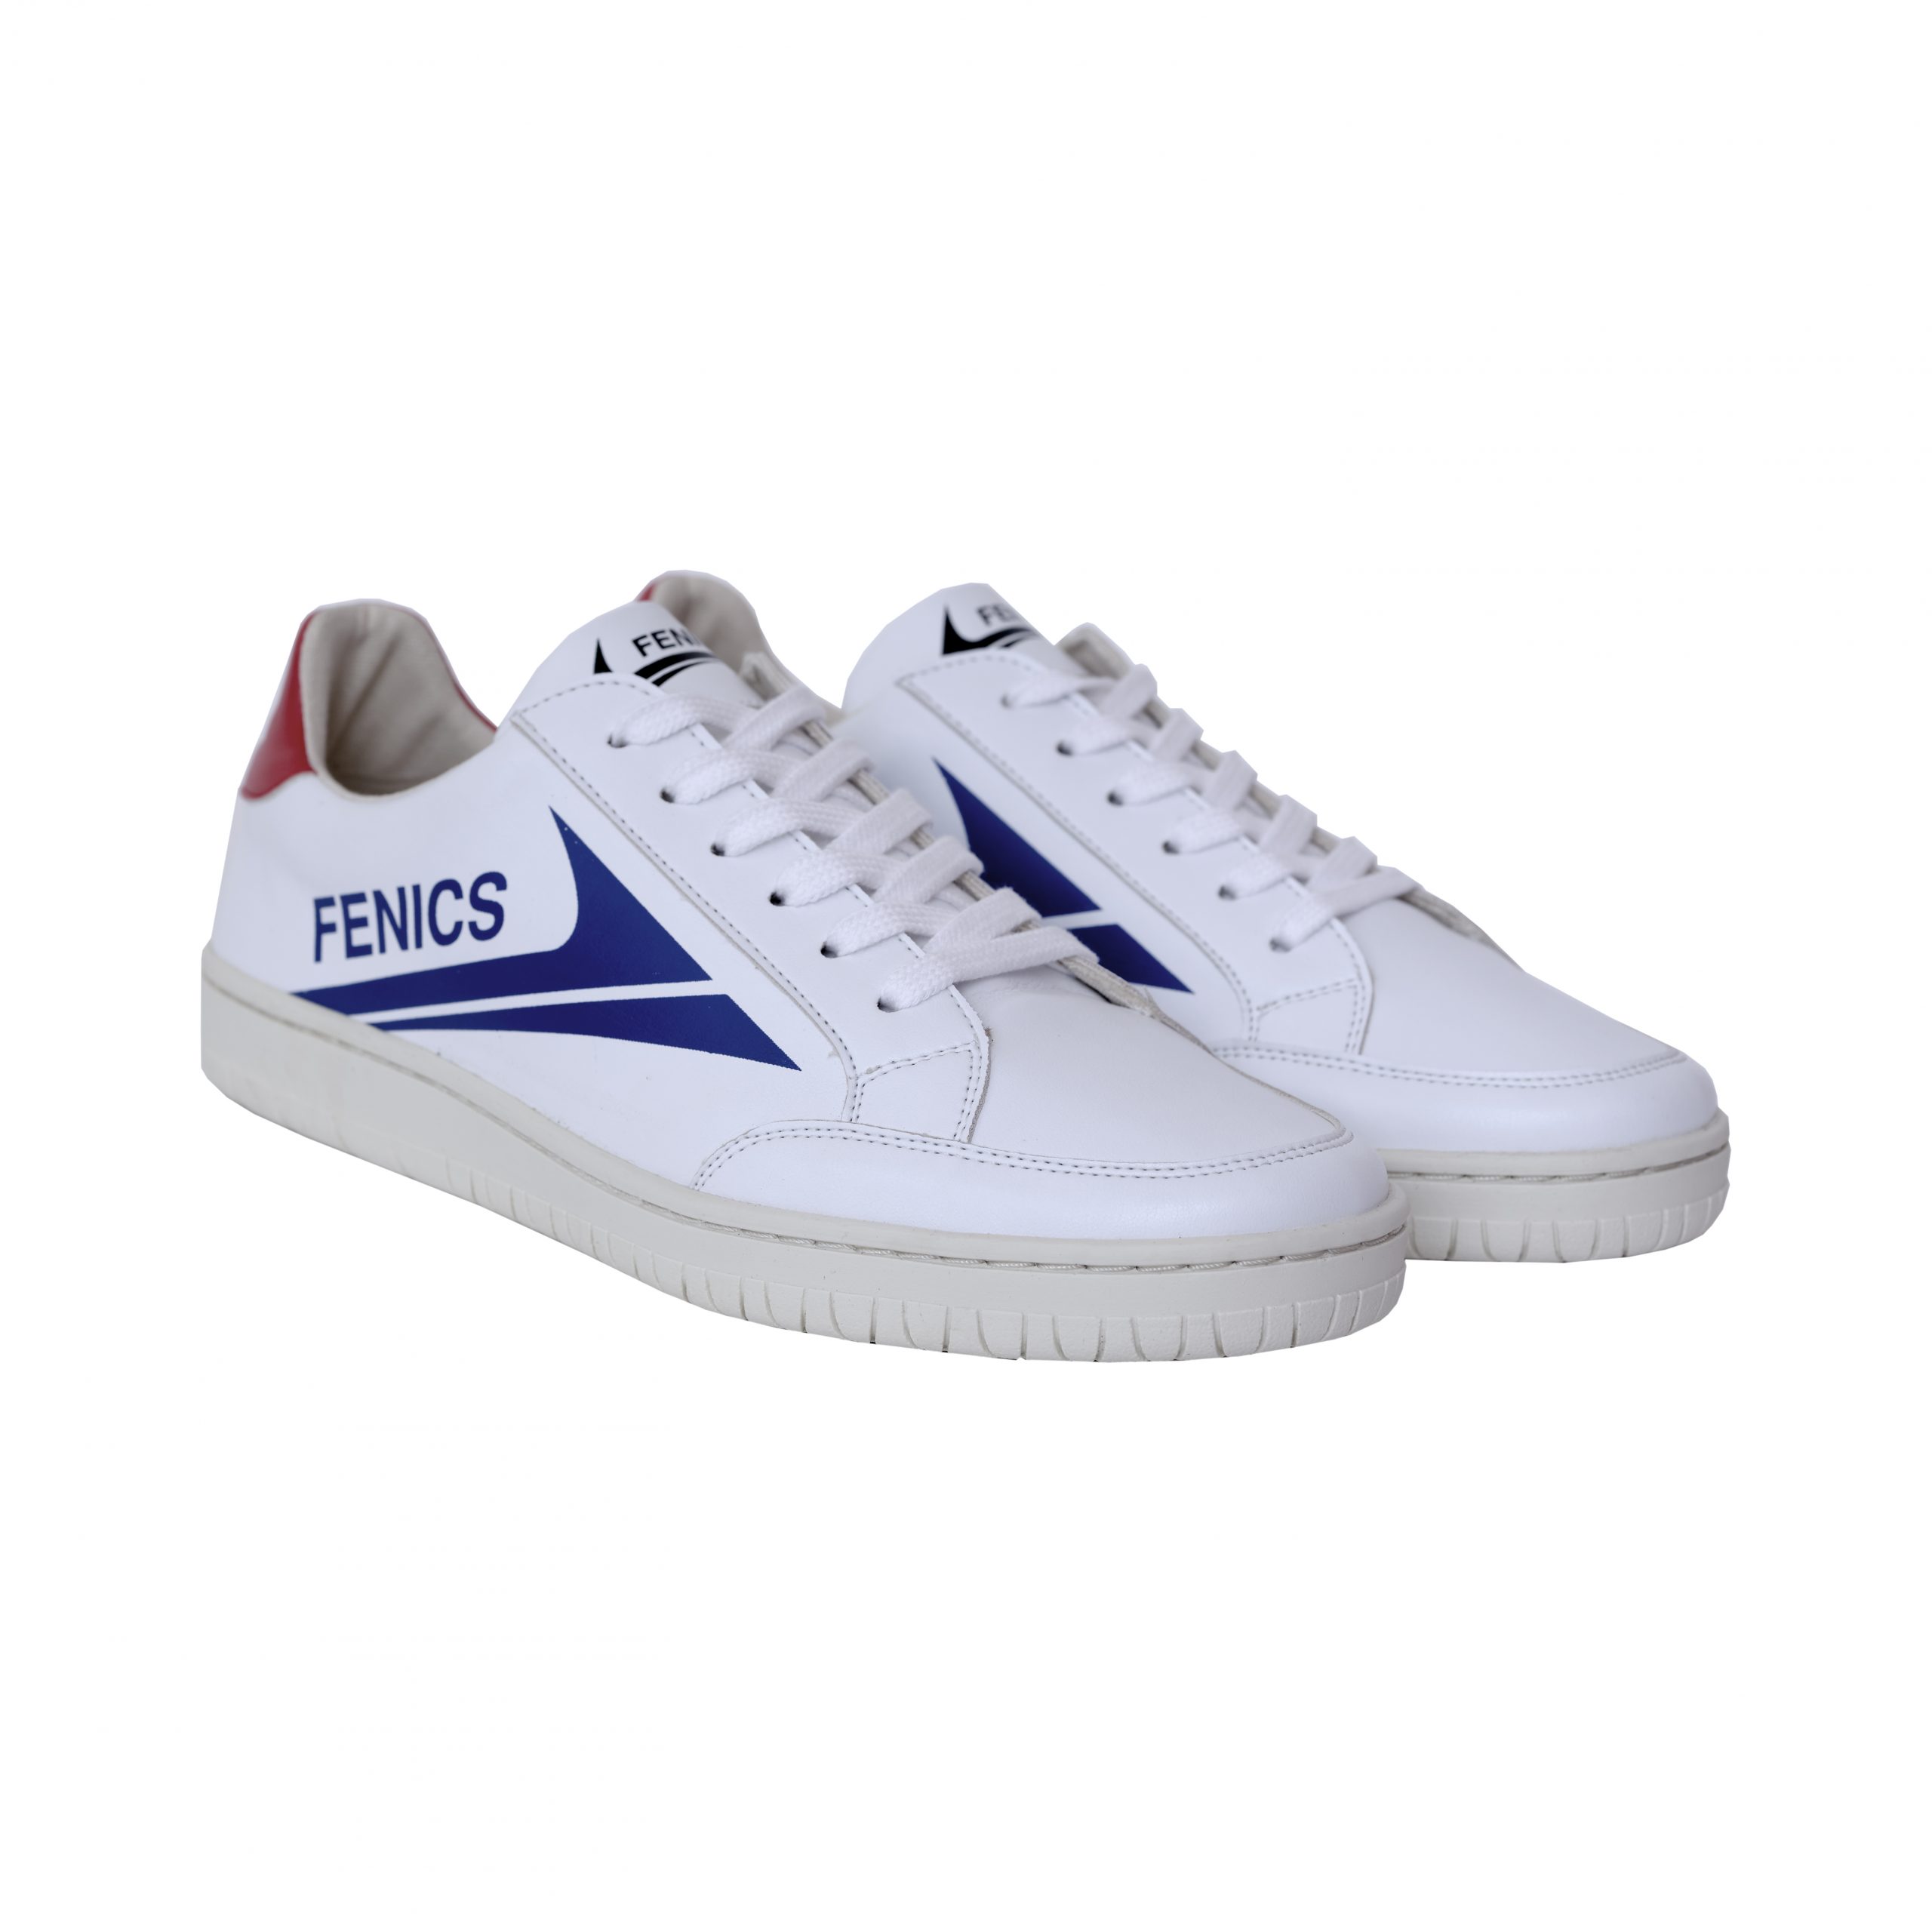 F80 Fenics Sneakers